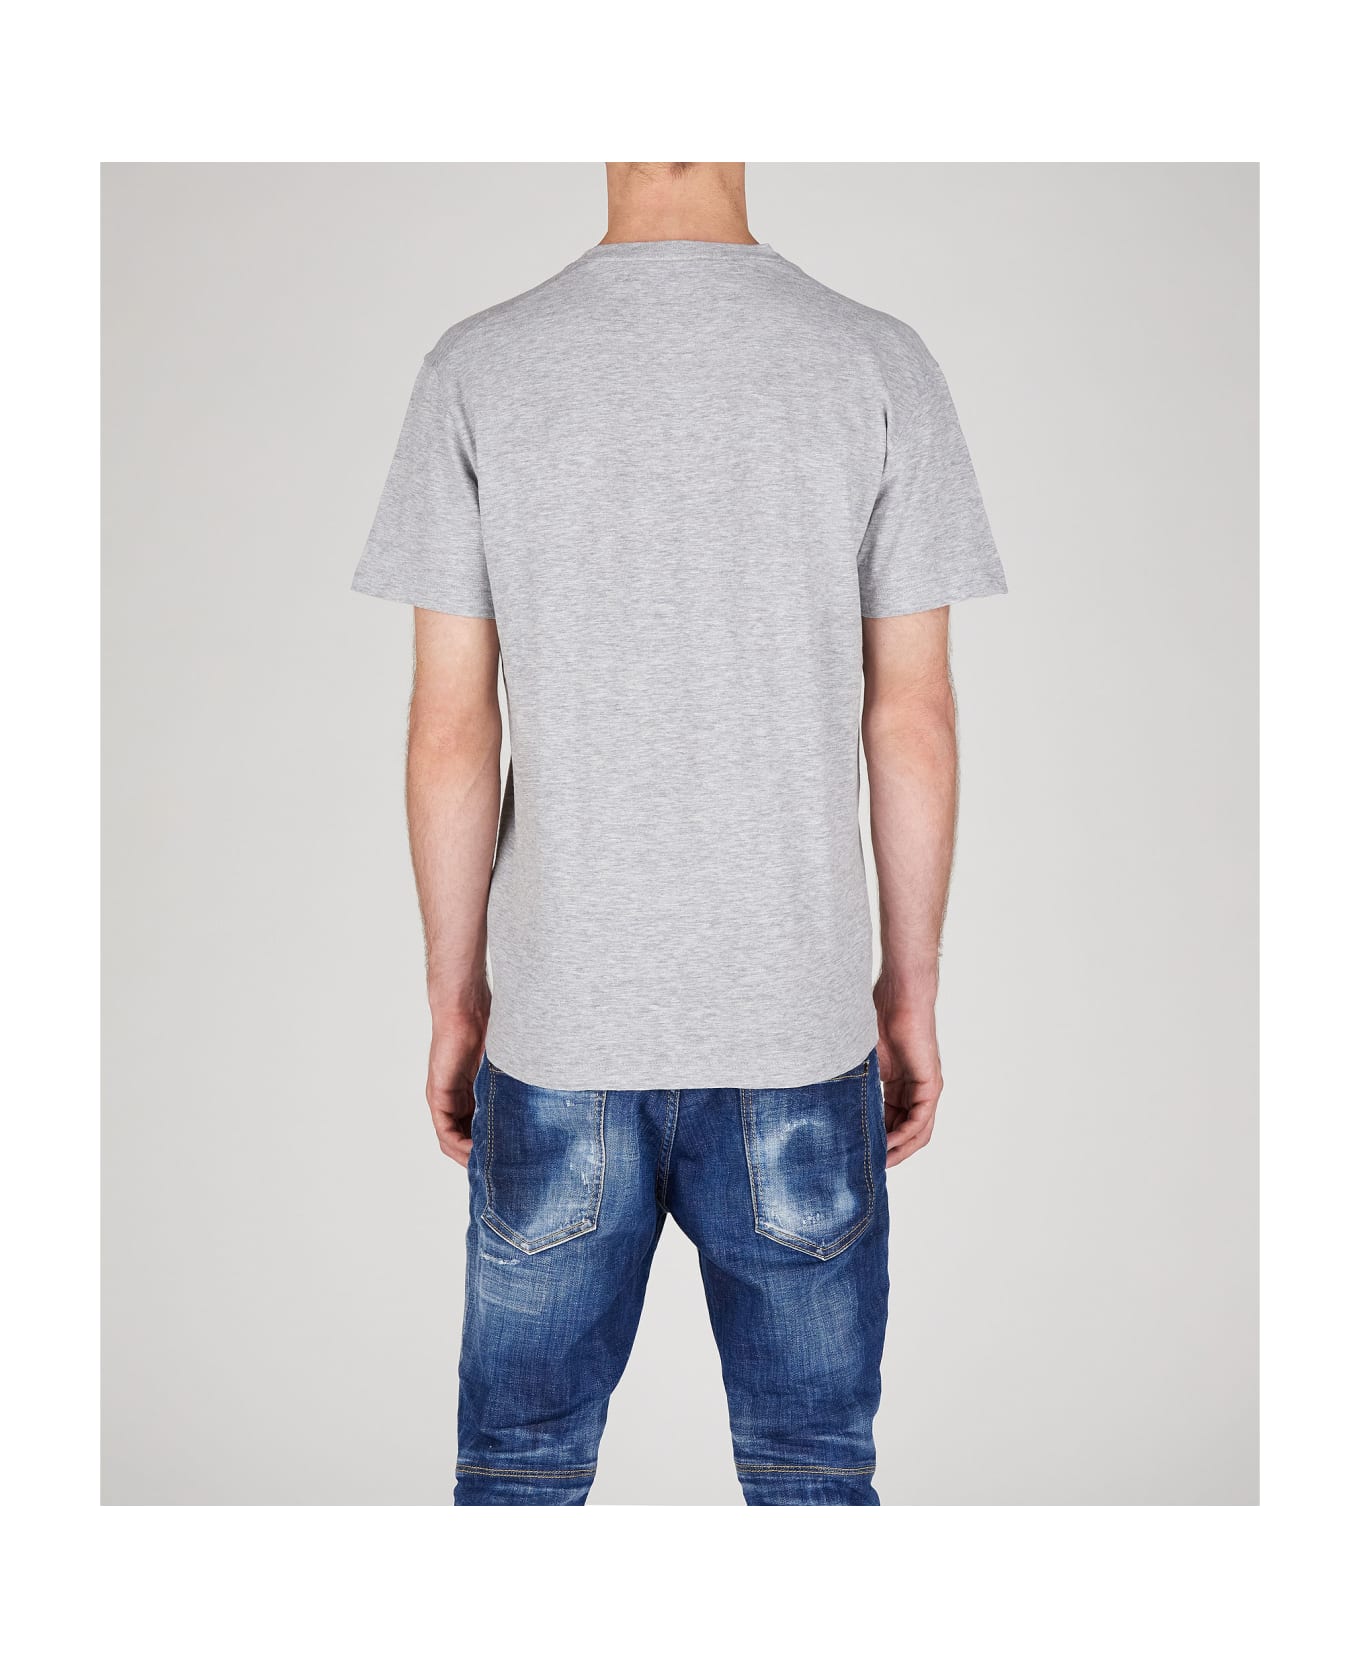 Dsquared2 Cool Fit T-shirt - Grey melange